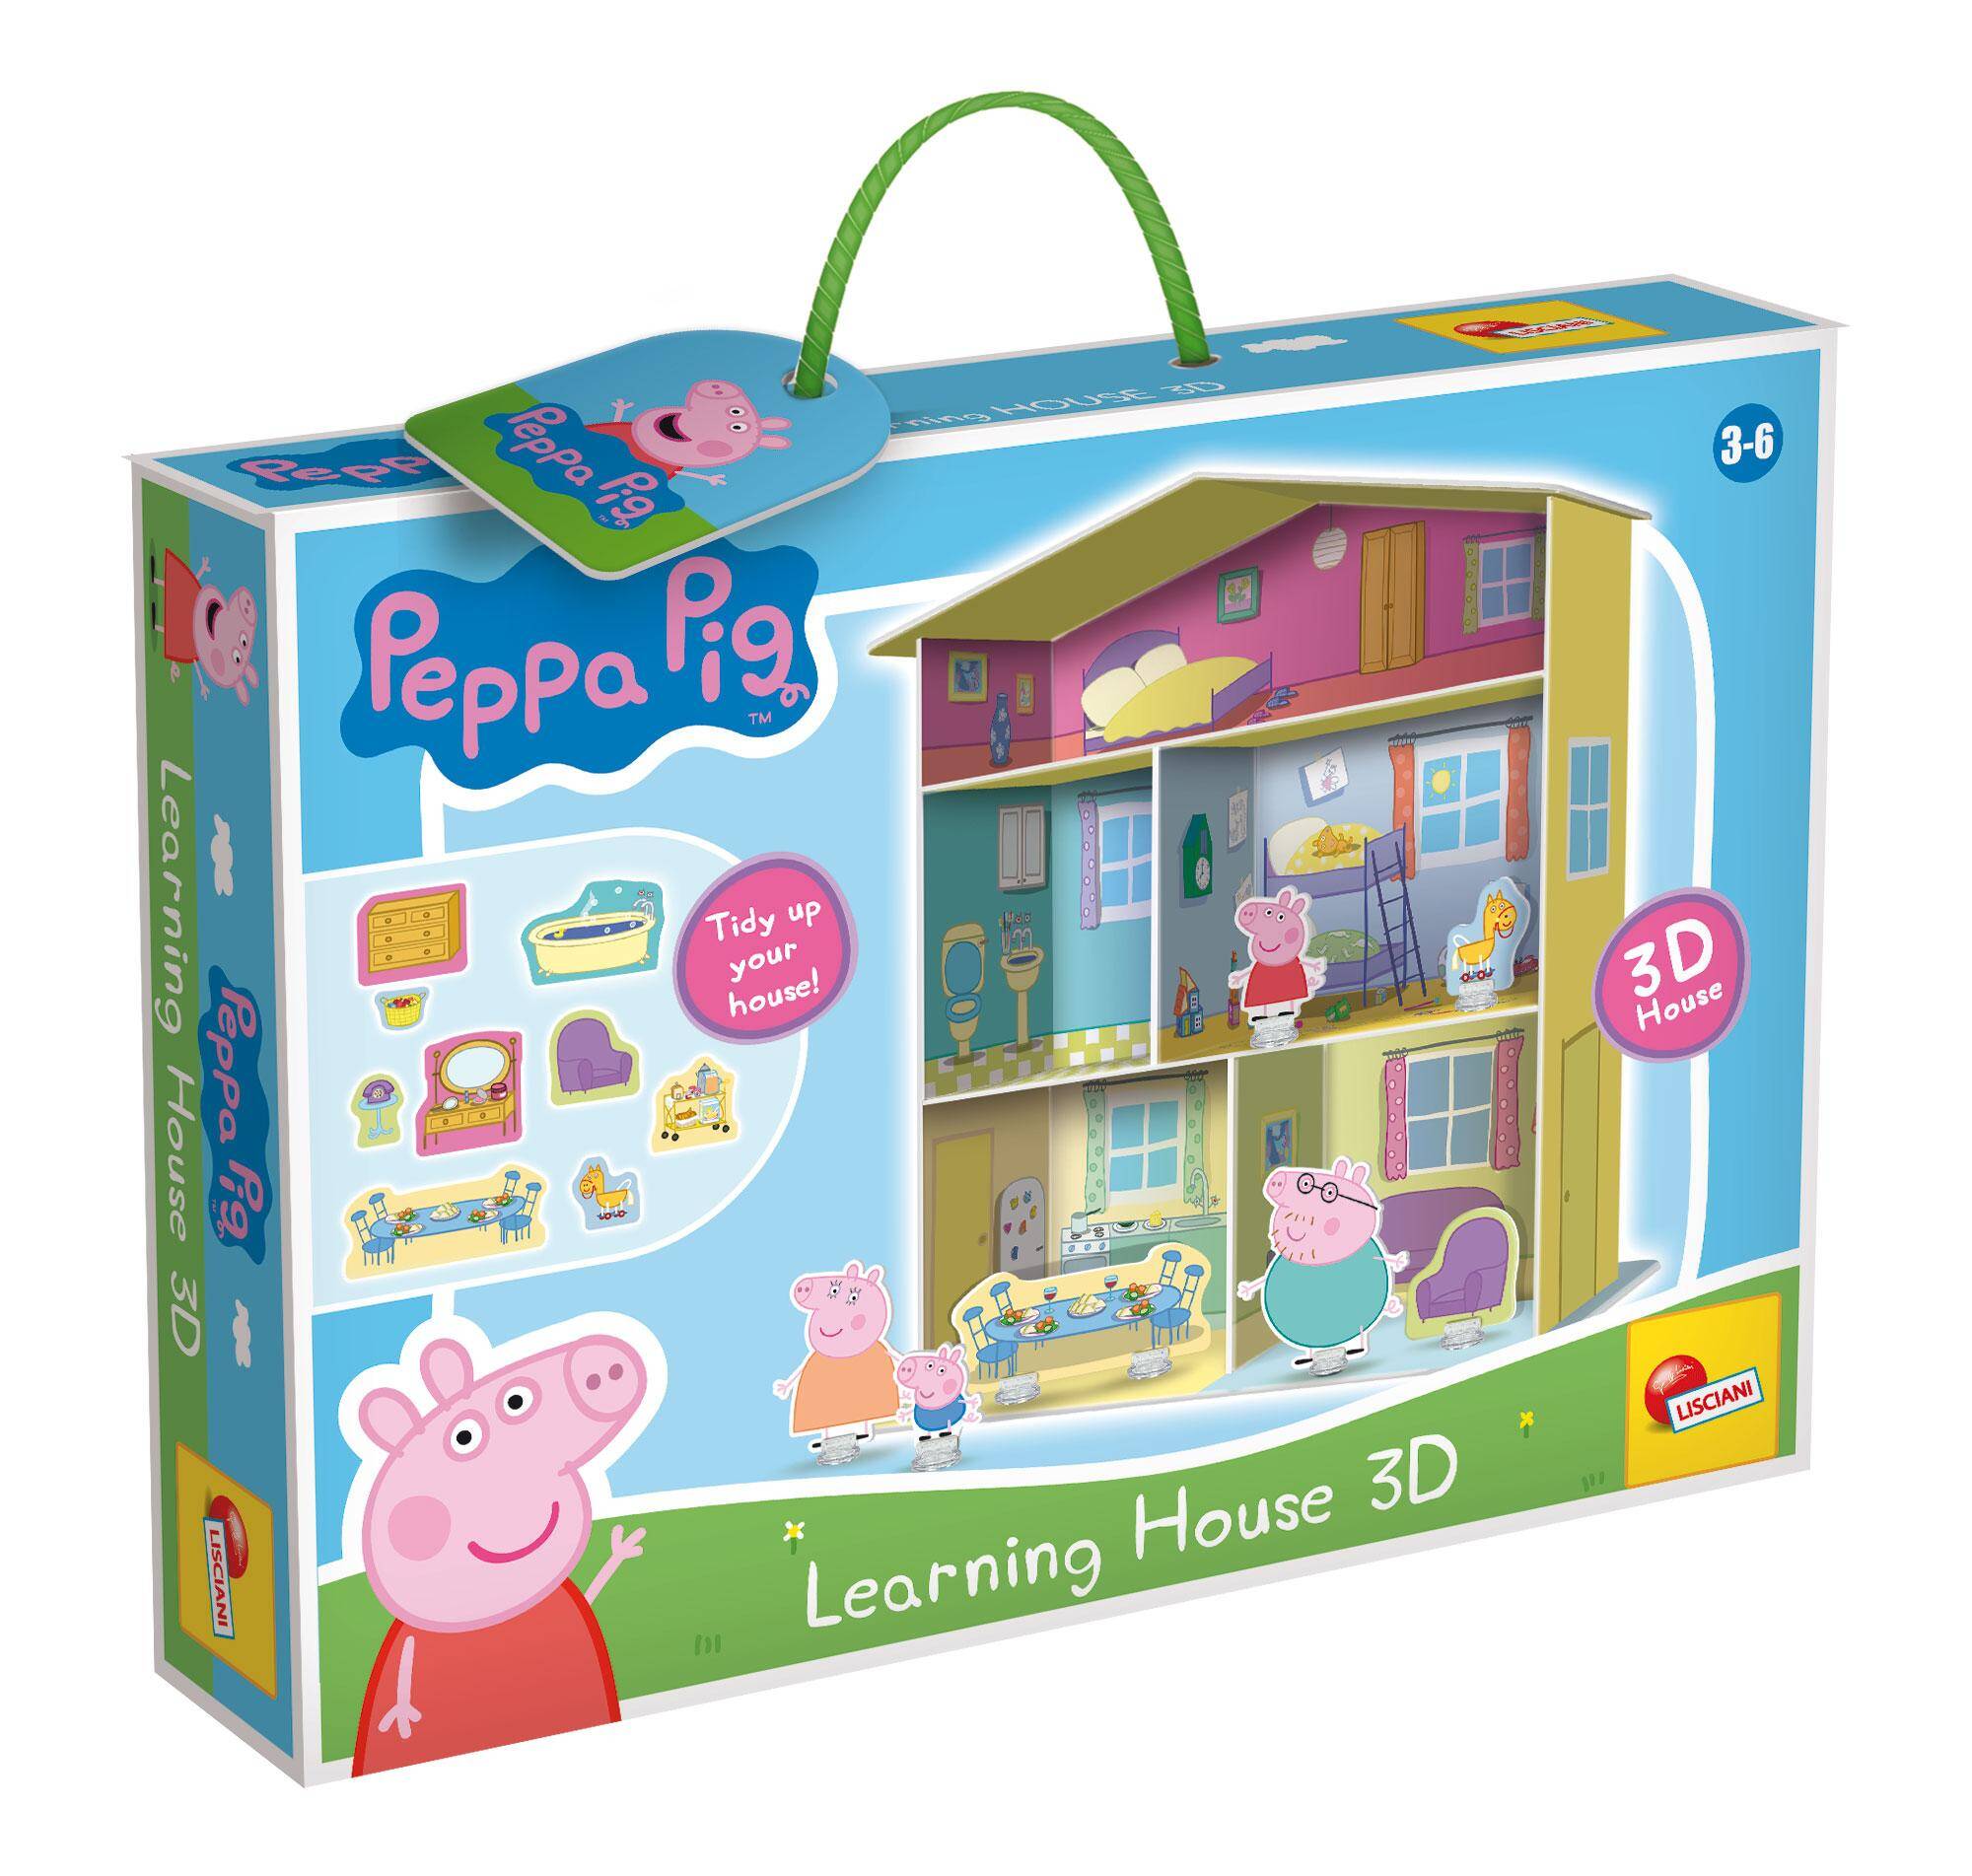 Peppa pig learning house 3D Lisiani 304-92055